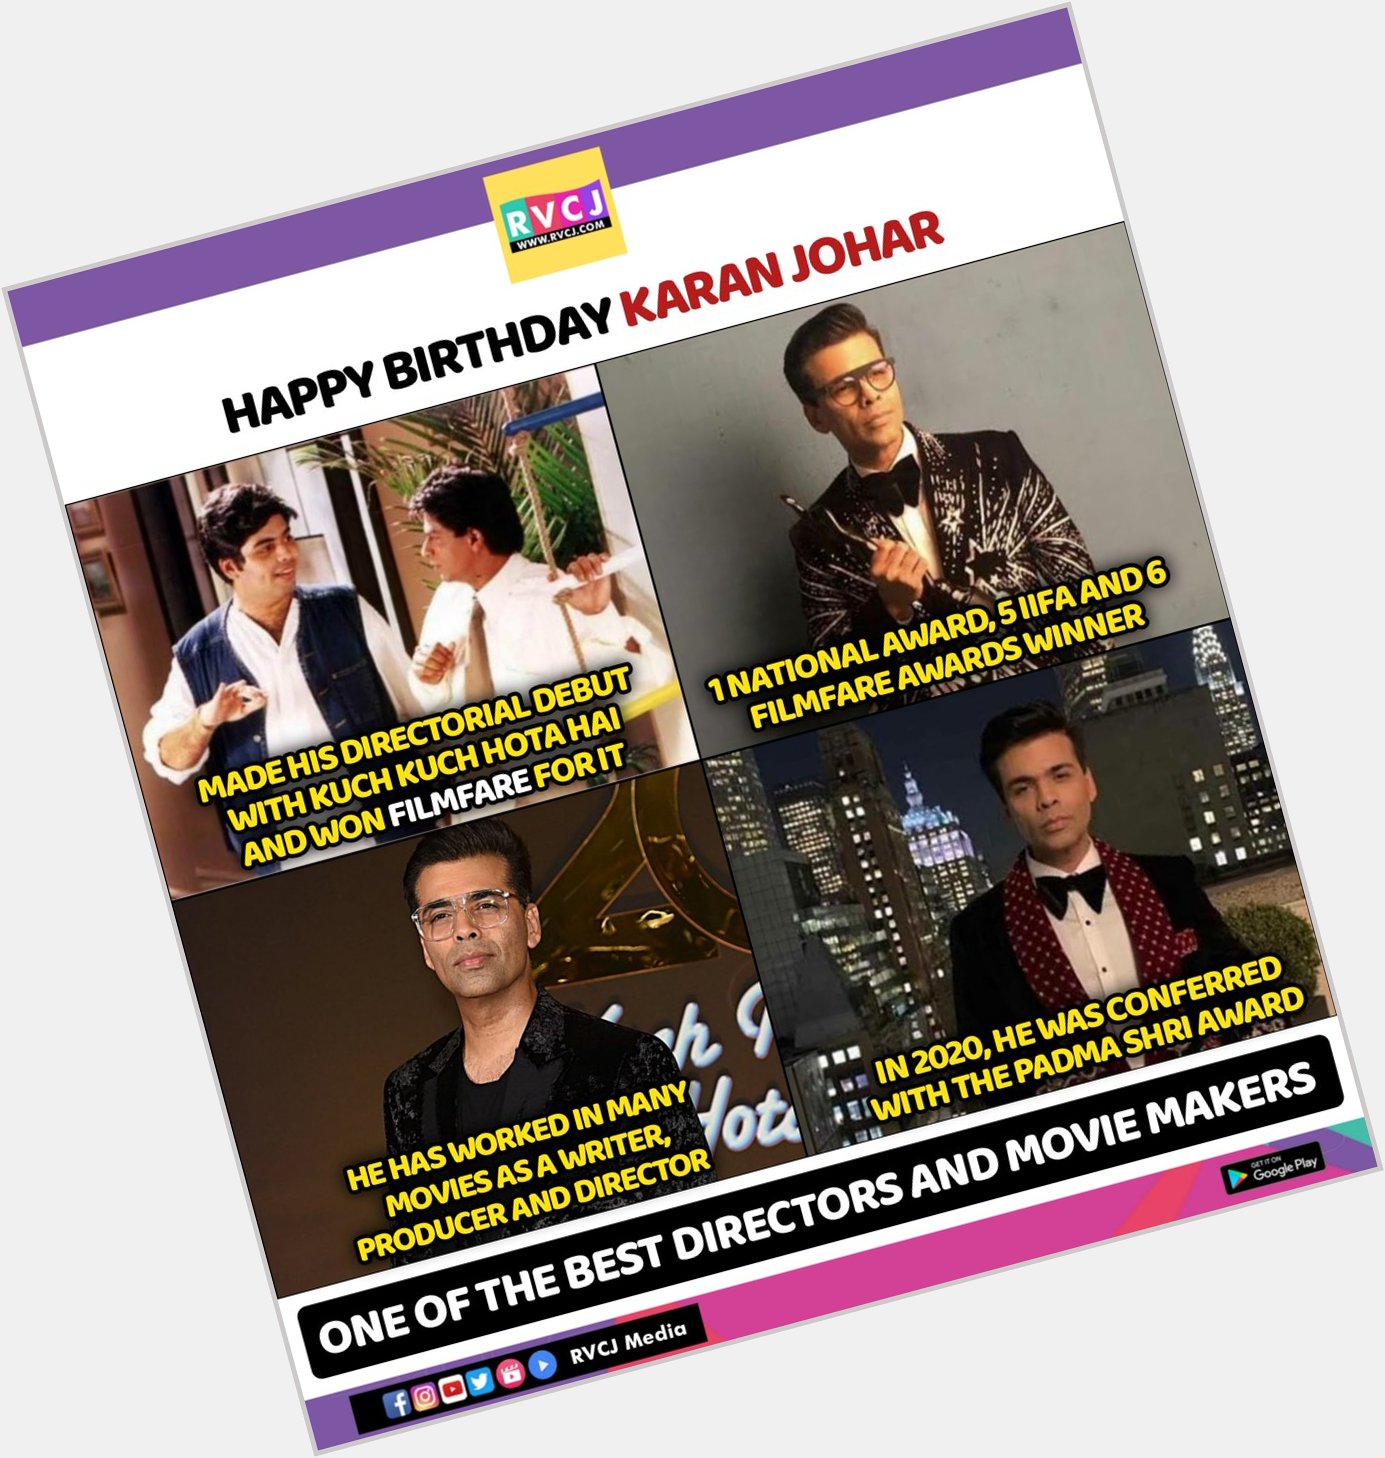 Happy Birthday Karan Johar!   